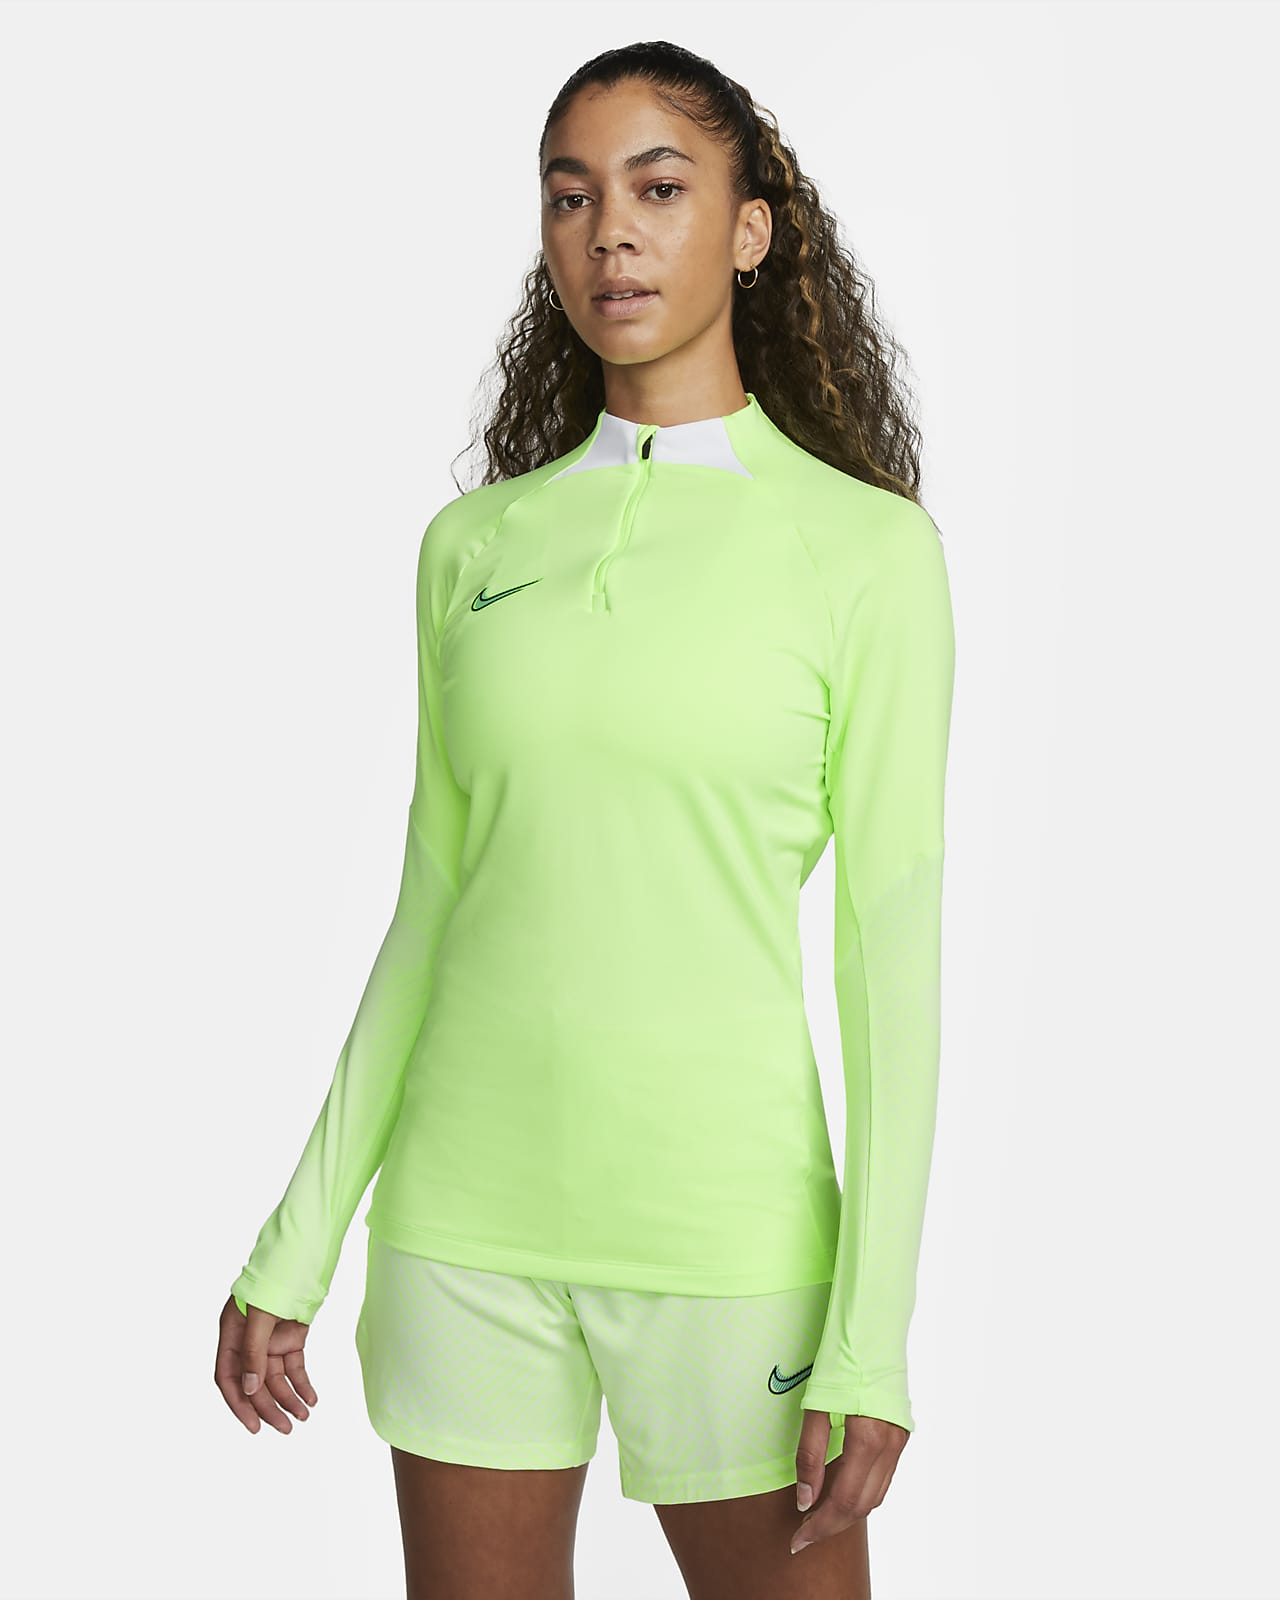 Camiseta de entrenamiento de fútbol para mujer Nike Dri-FIT Nike.com